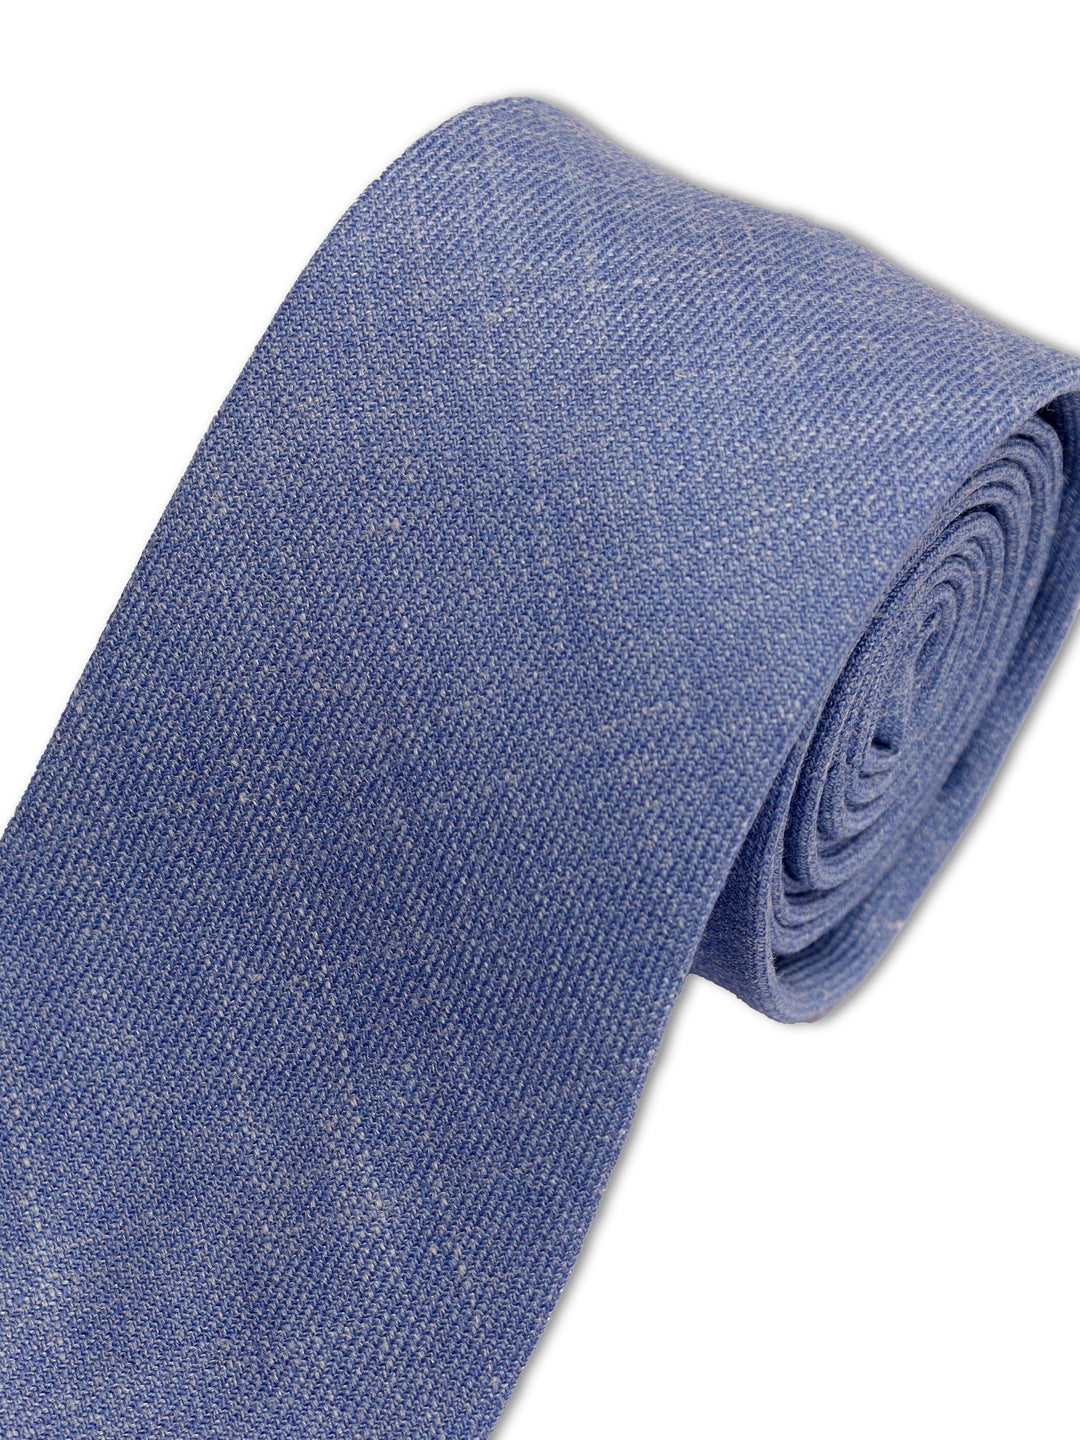 TM Lewin Mens (75%Wool15%Silk 10% Linen) Plain Tie 64656